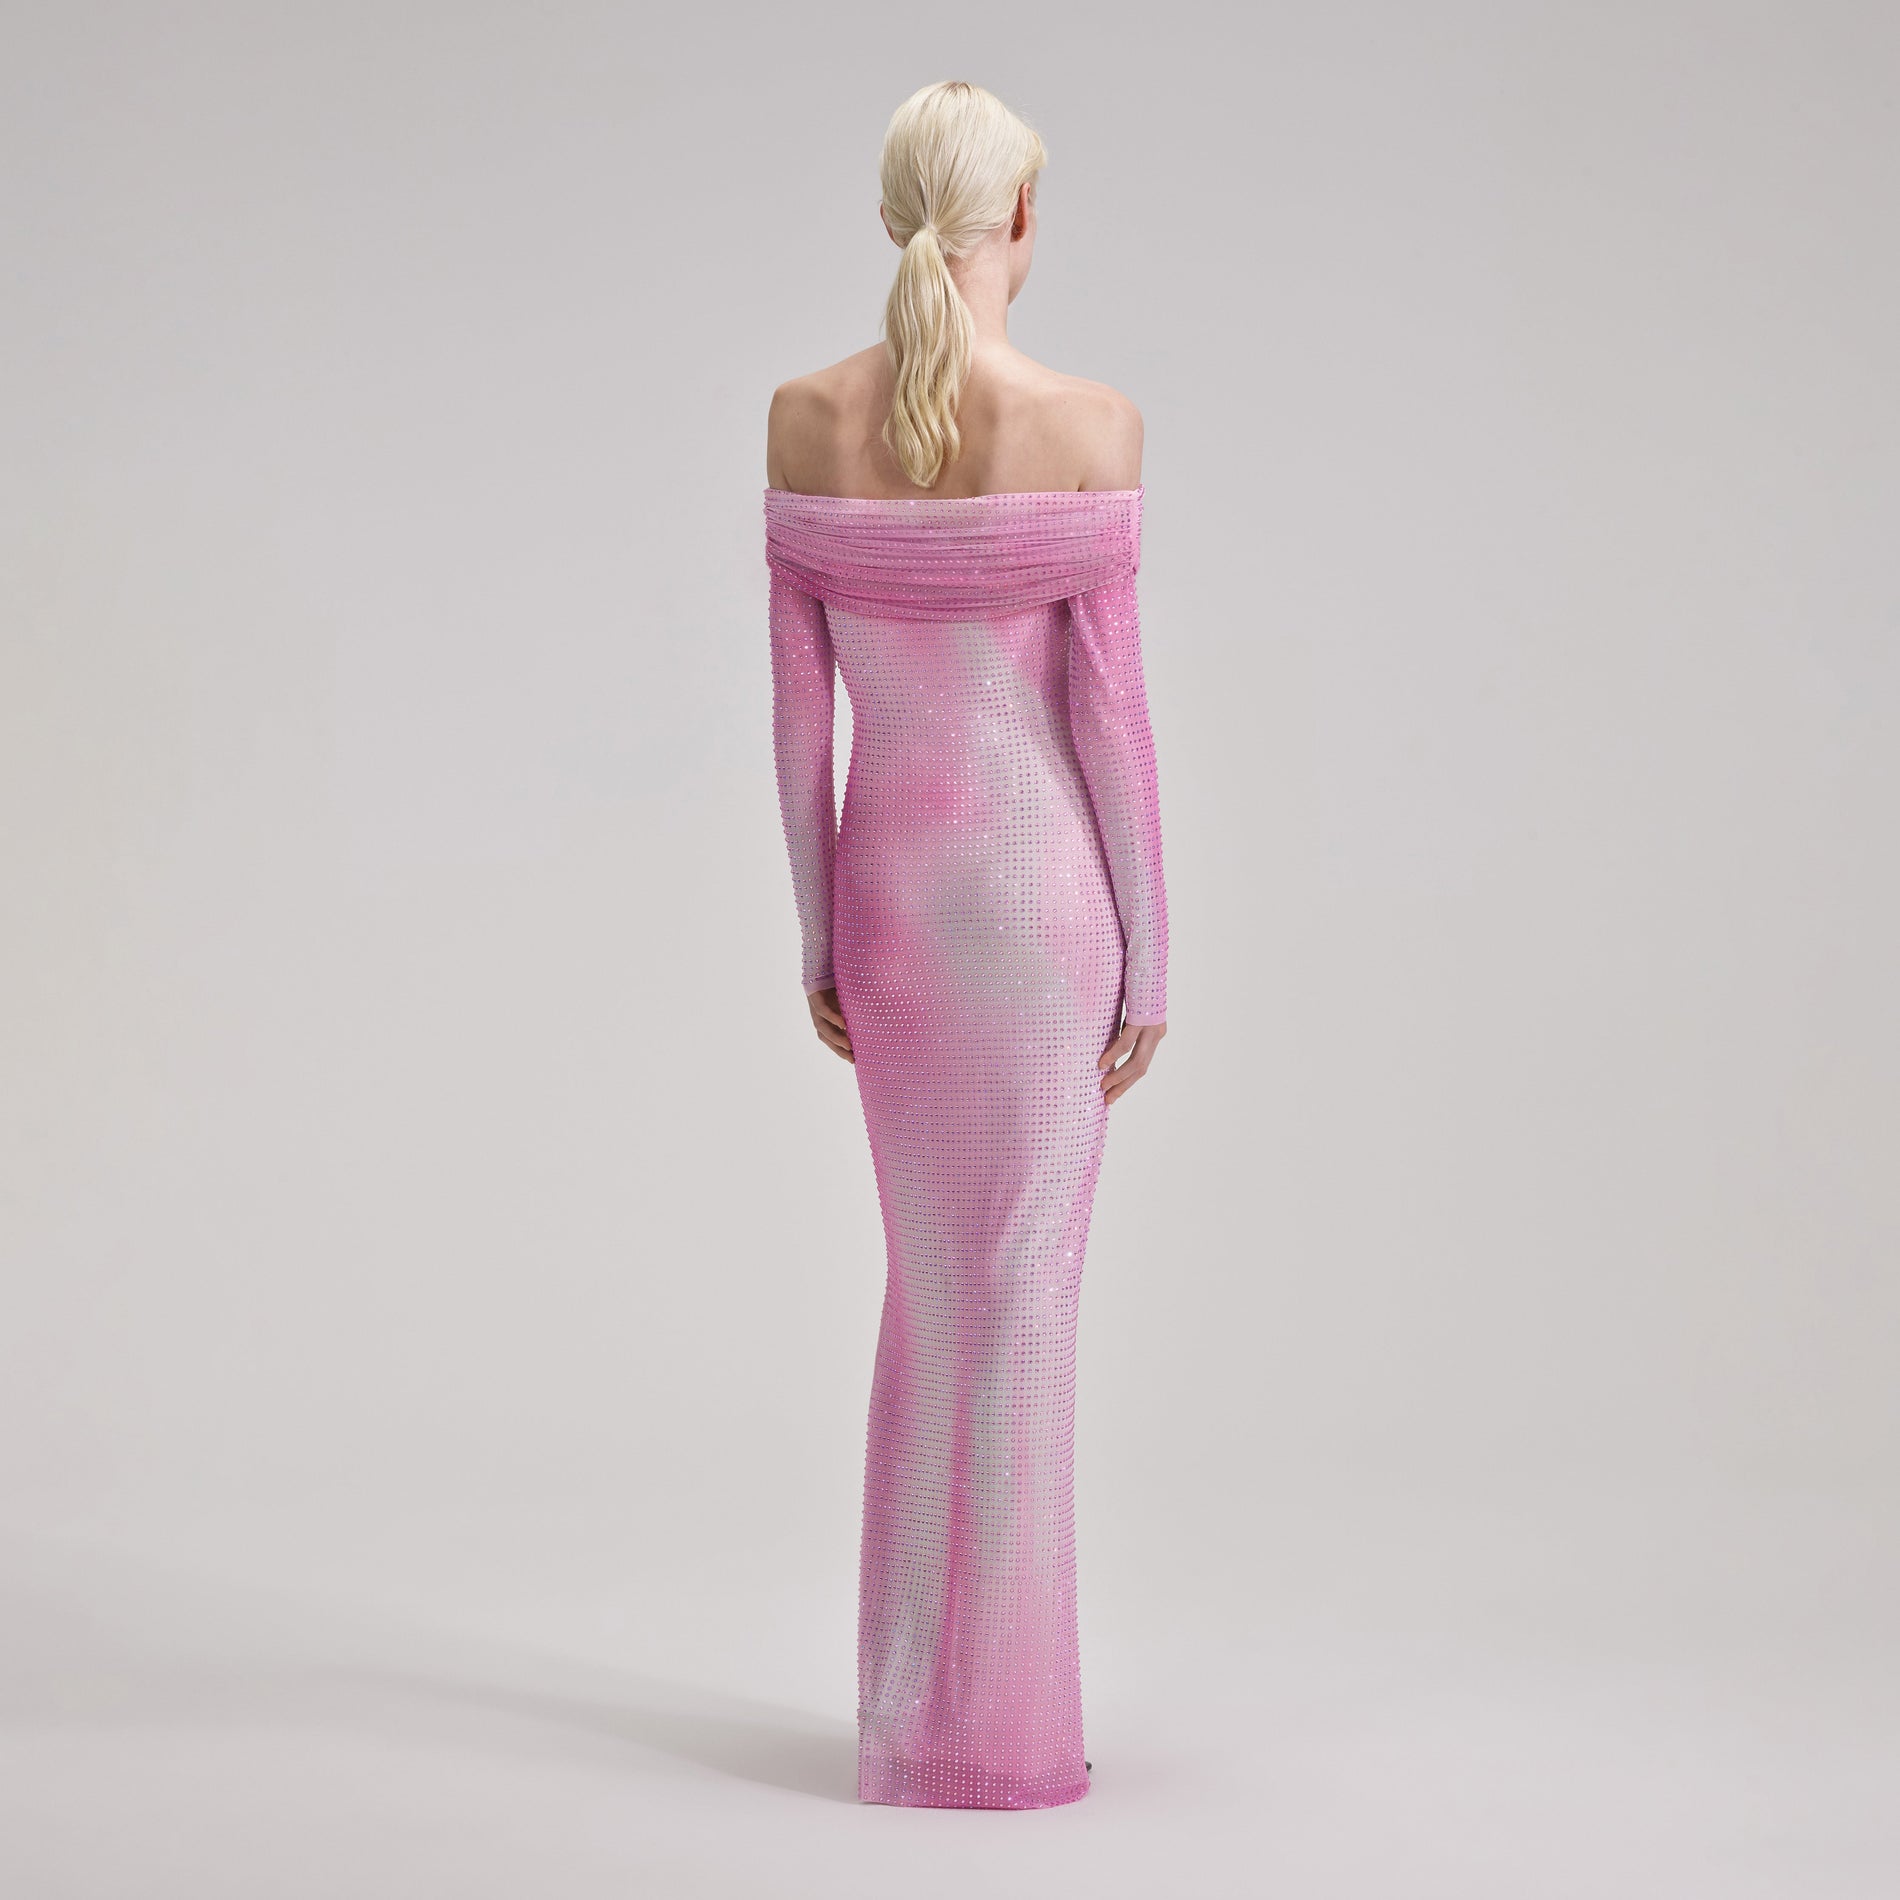 A woman wearing the Pink Contour Print Maxi Dress